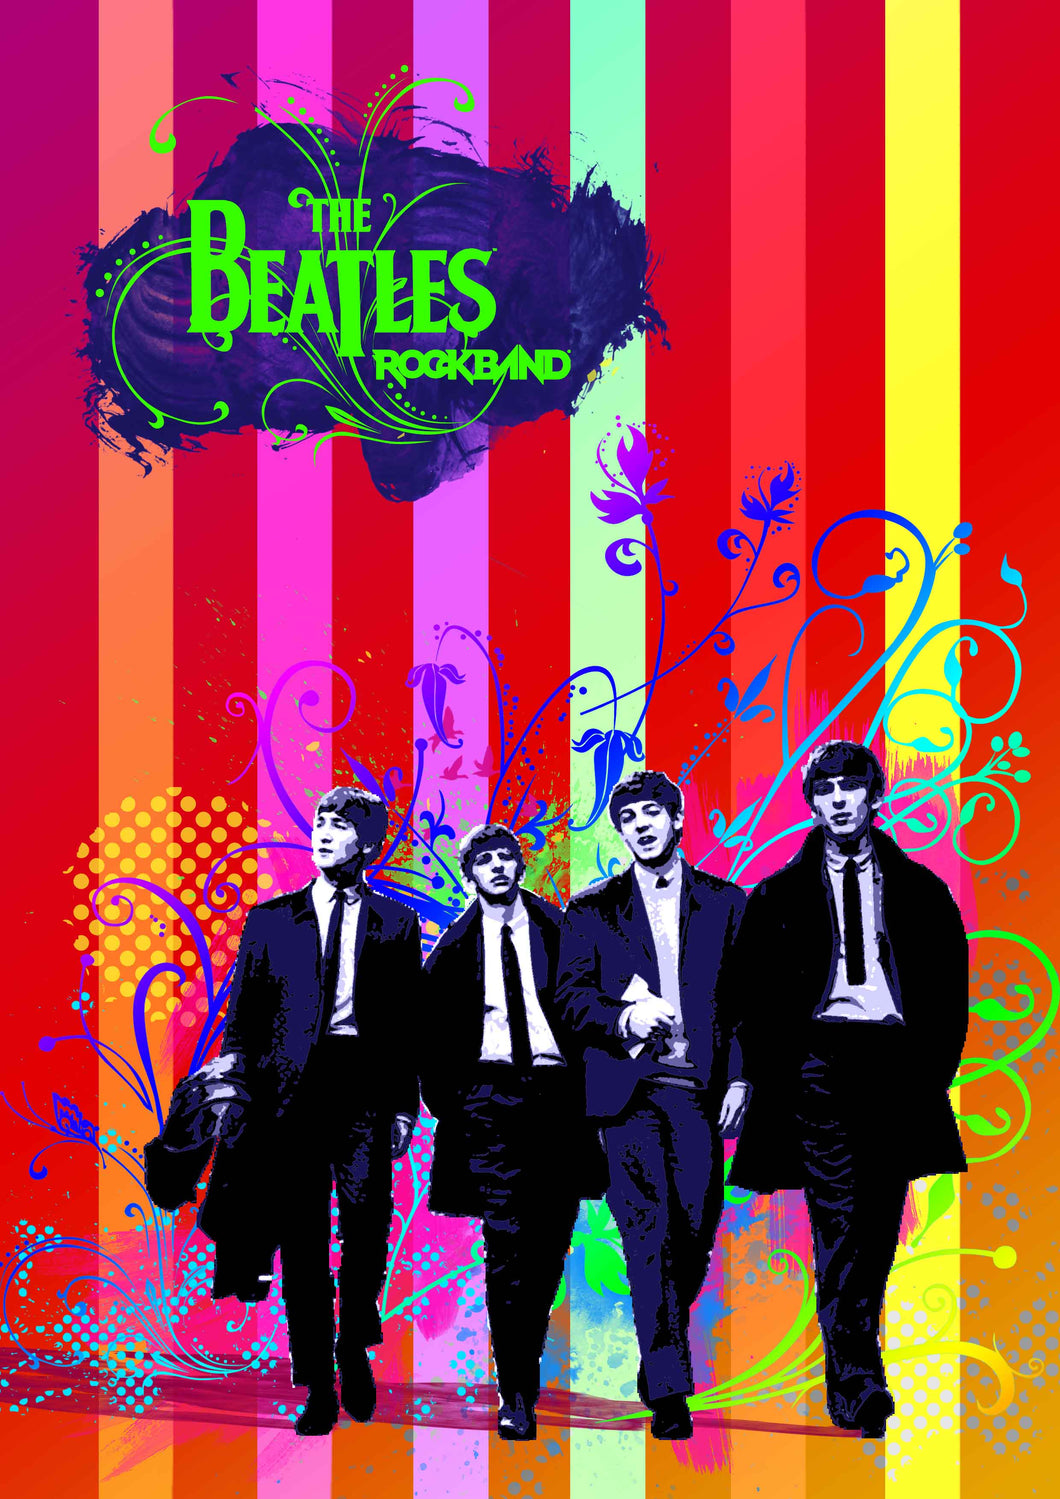 Poster de Banda The Beatles 20